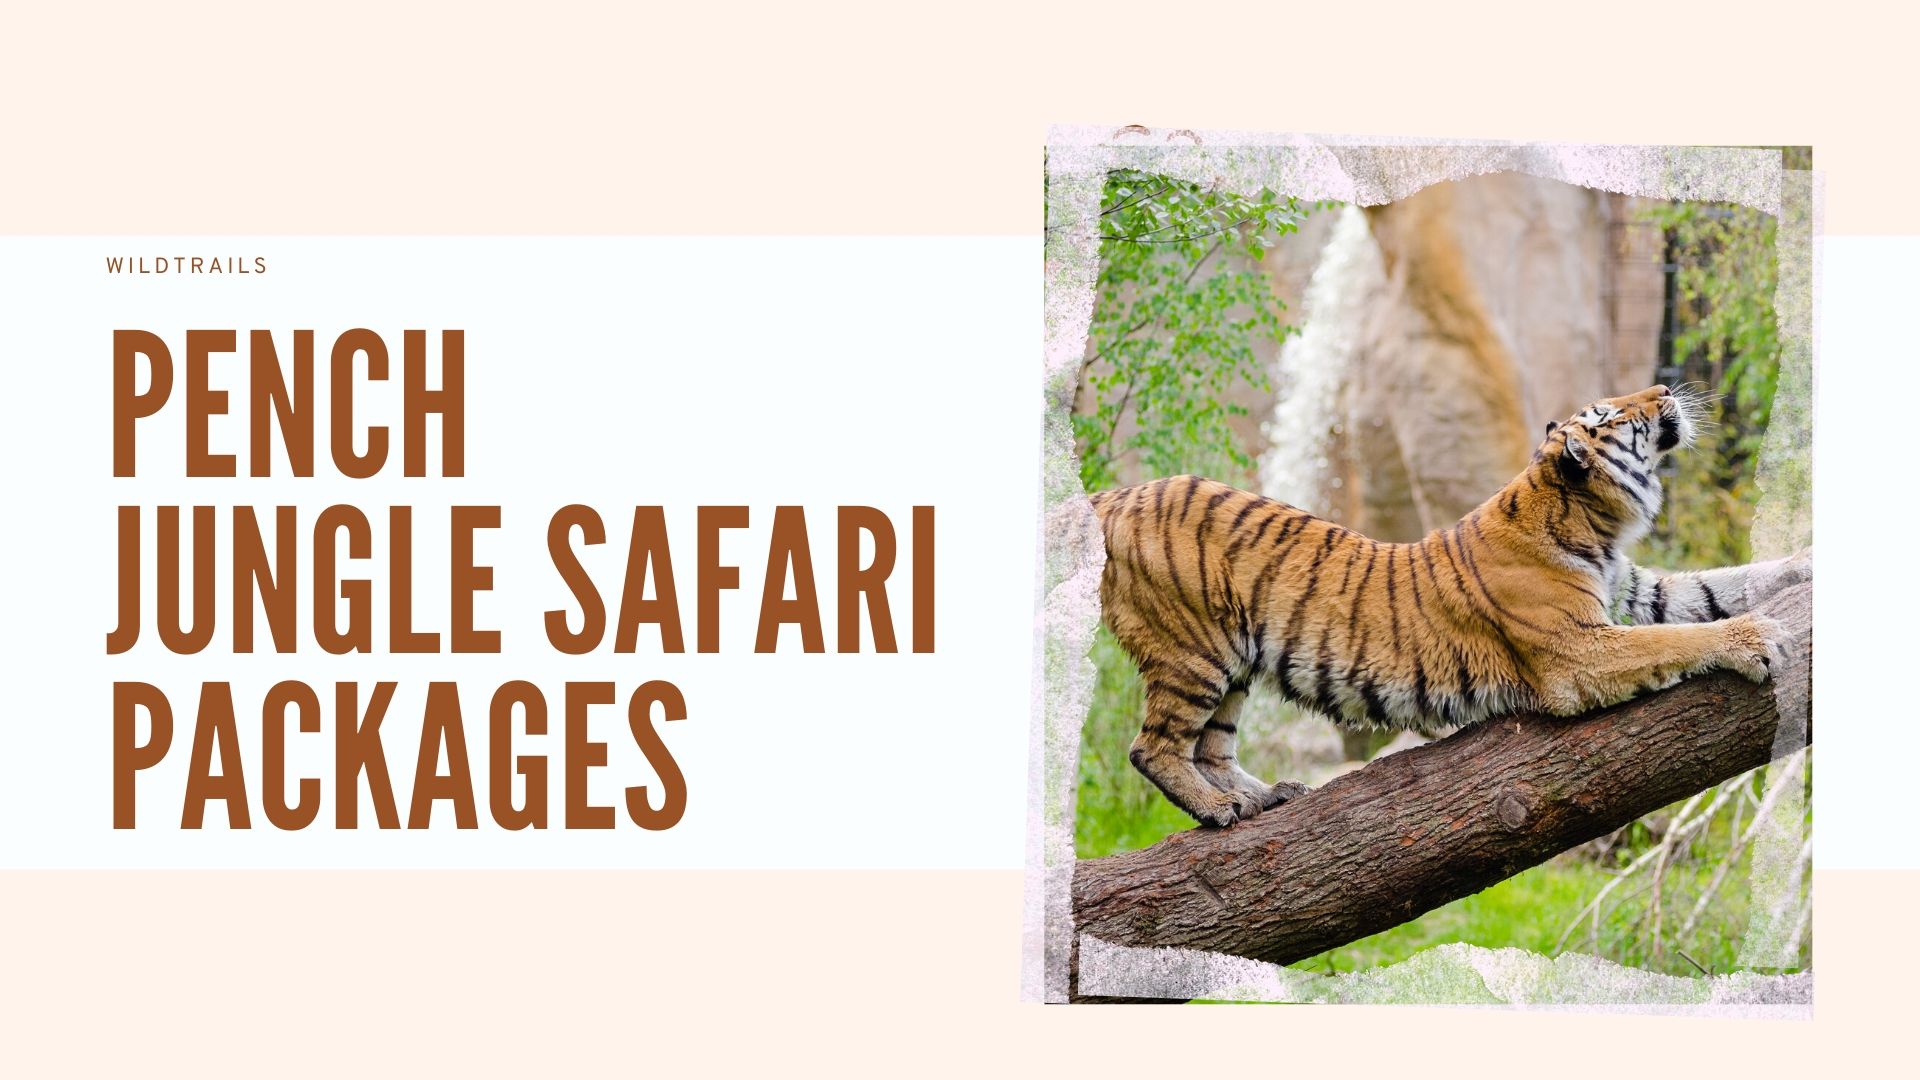 Pench Jungle Safari Packages